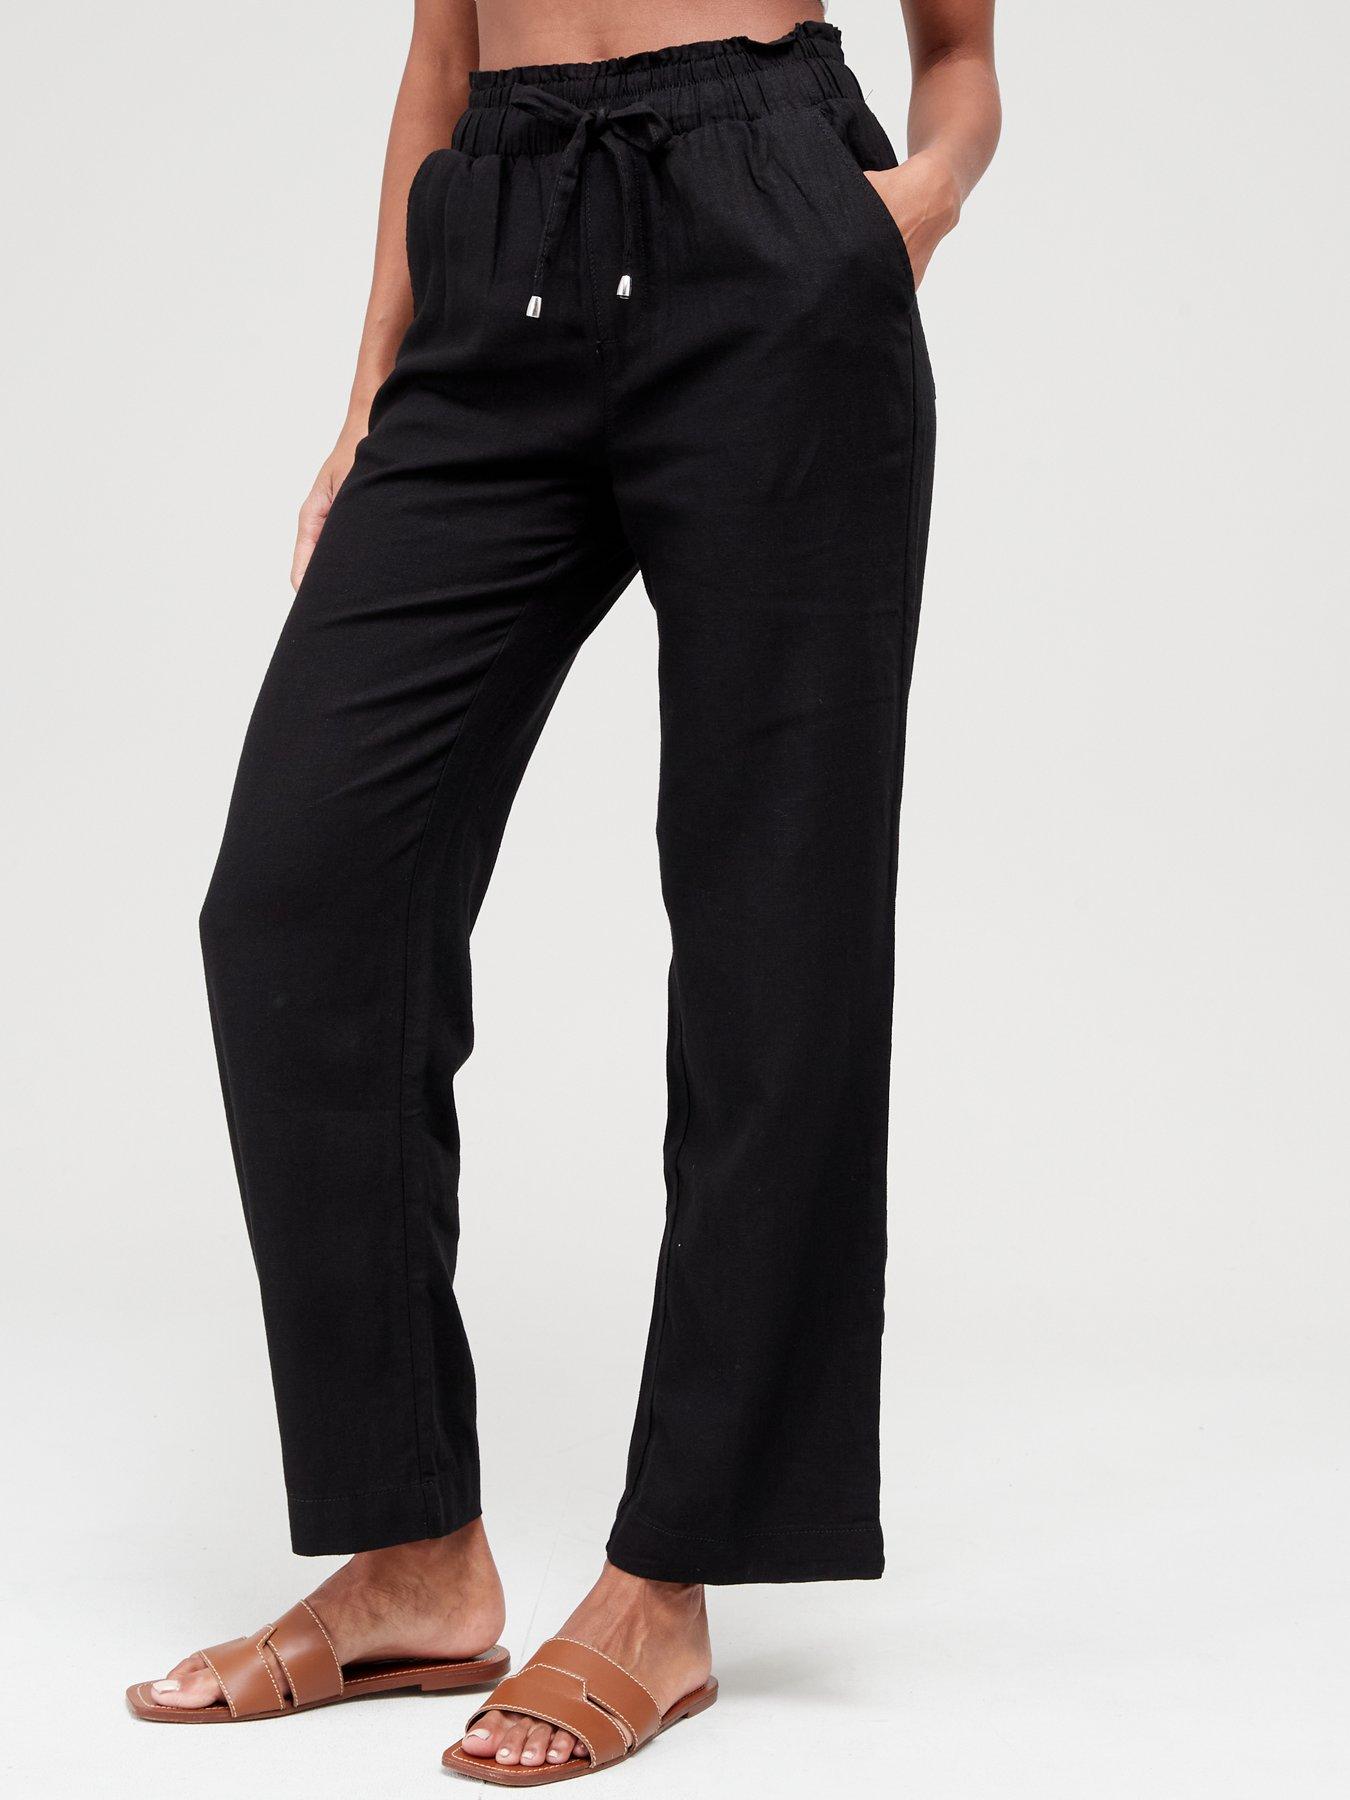 New Womens Black Linen NEXT Trousers Size 12 Petite Leg 29